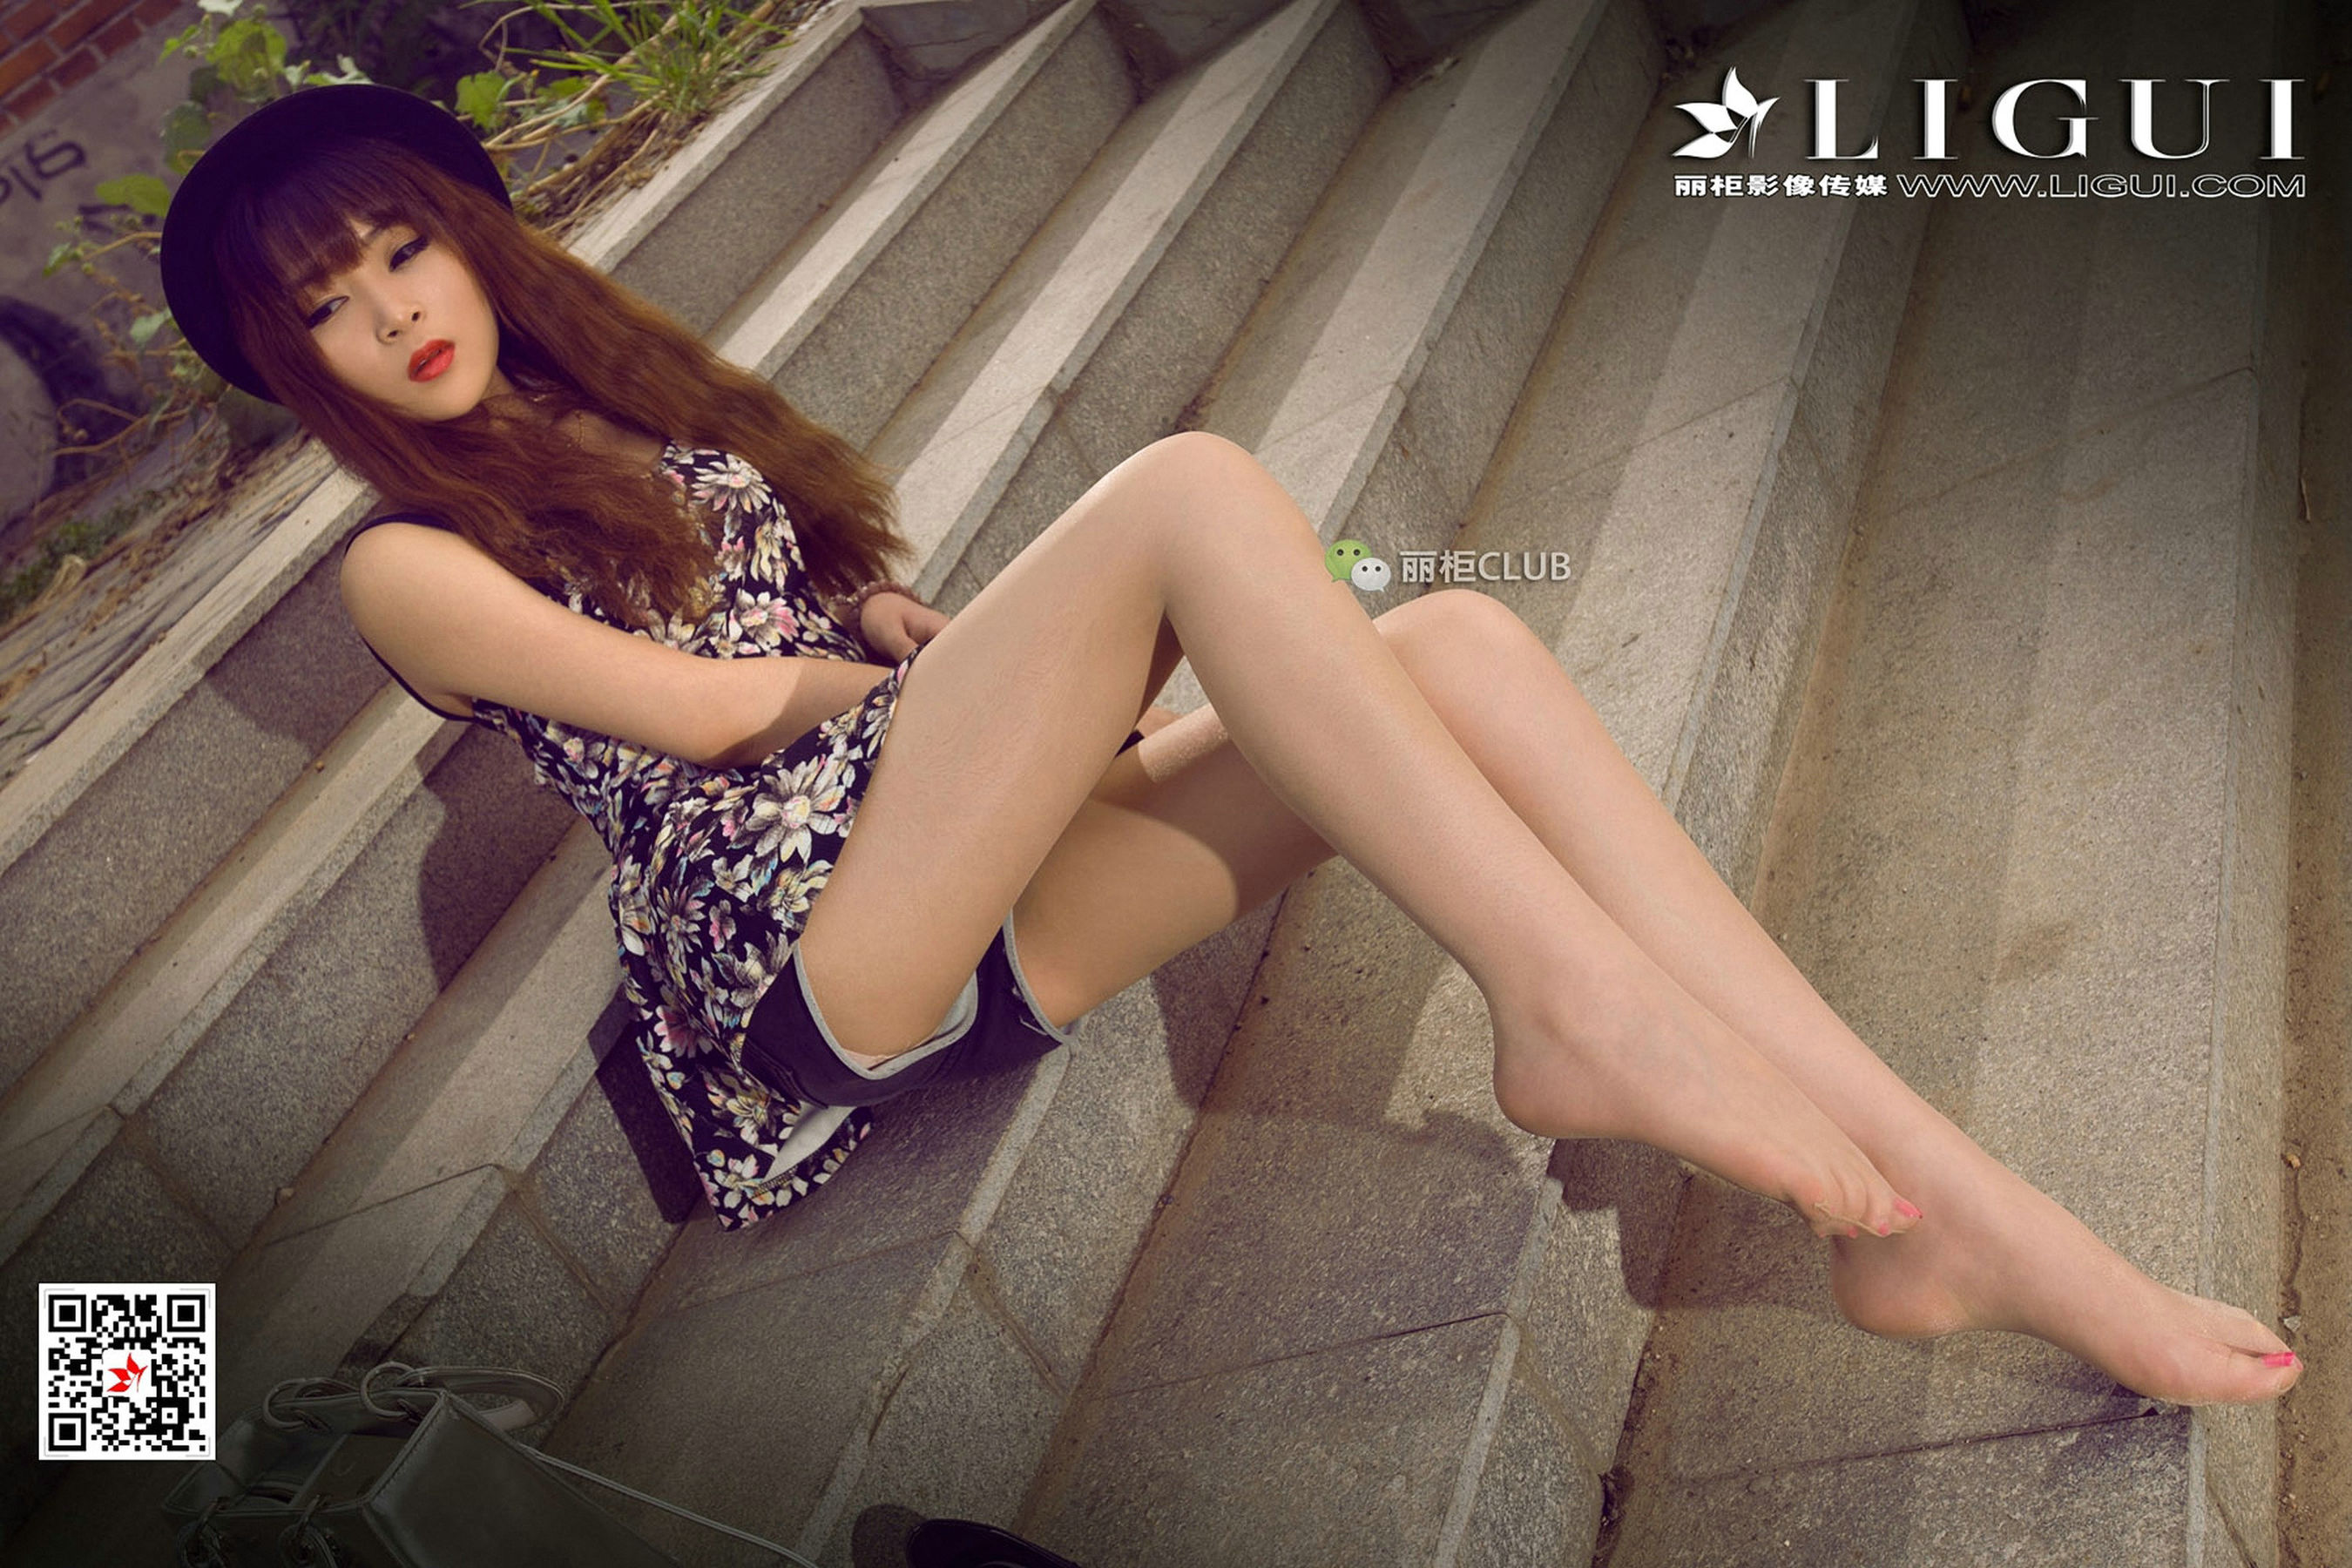 Model Yuner Dress on the Street Shooting Beautiful Leg Foot Ligui